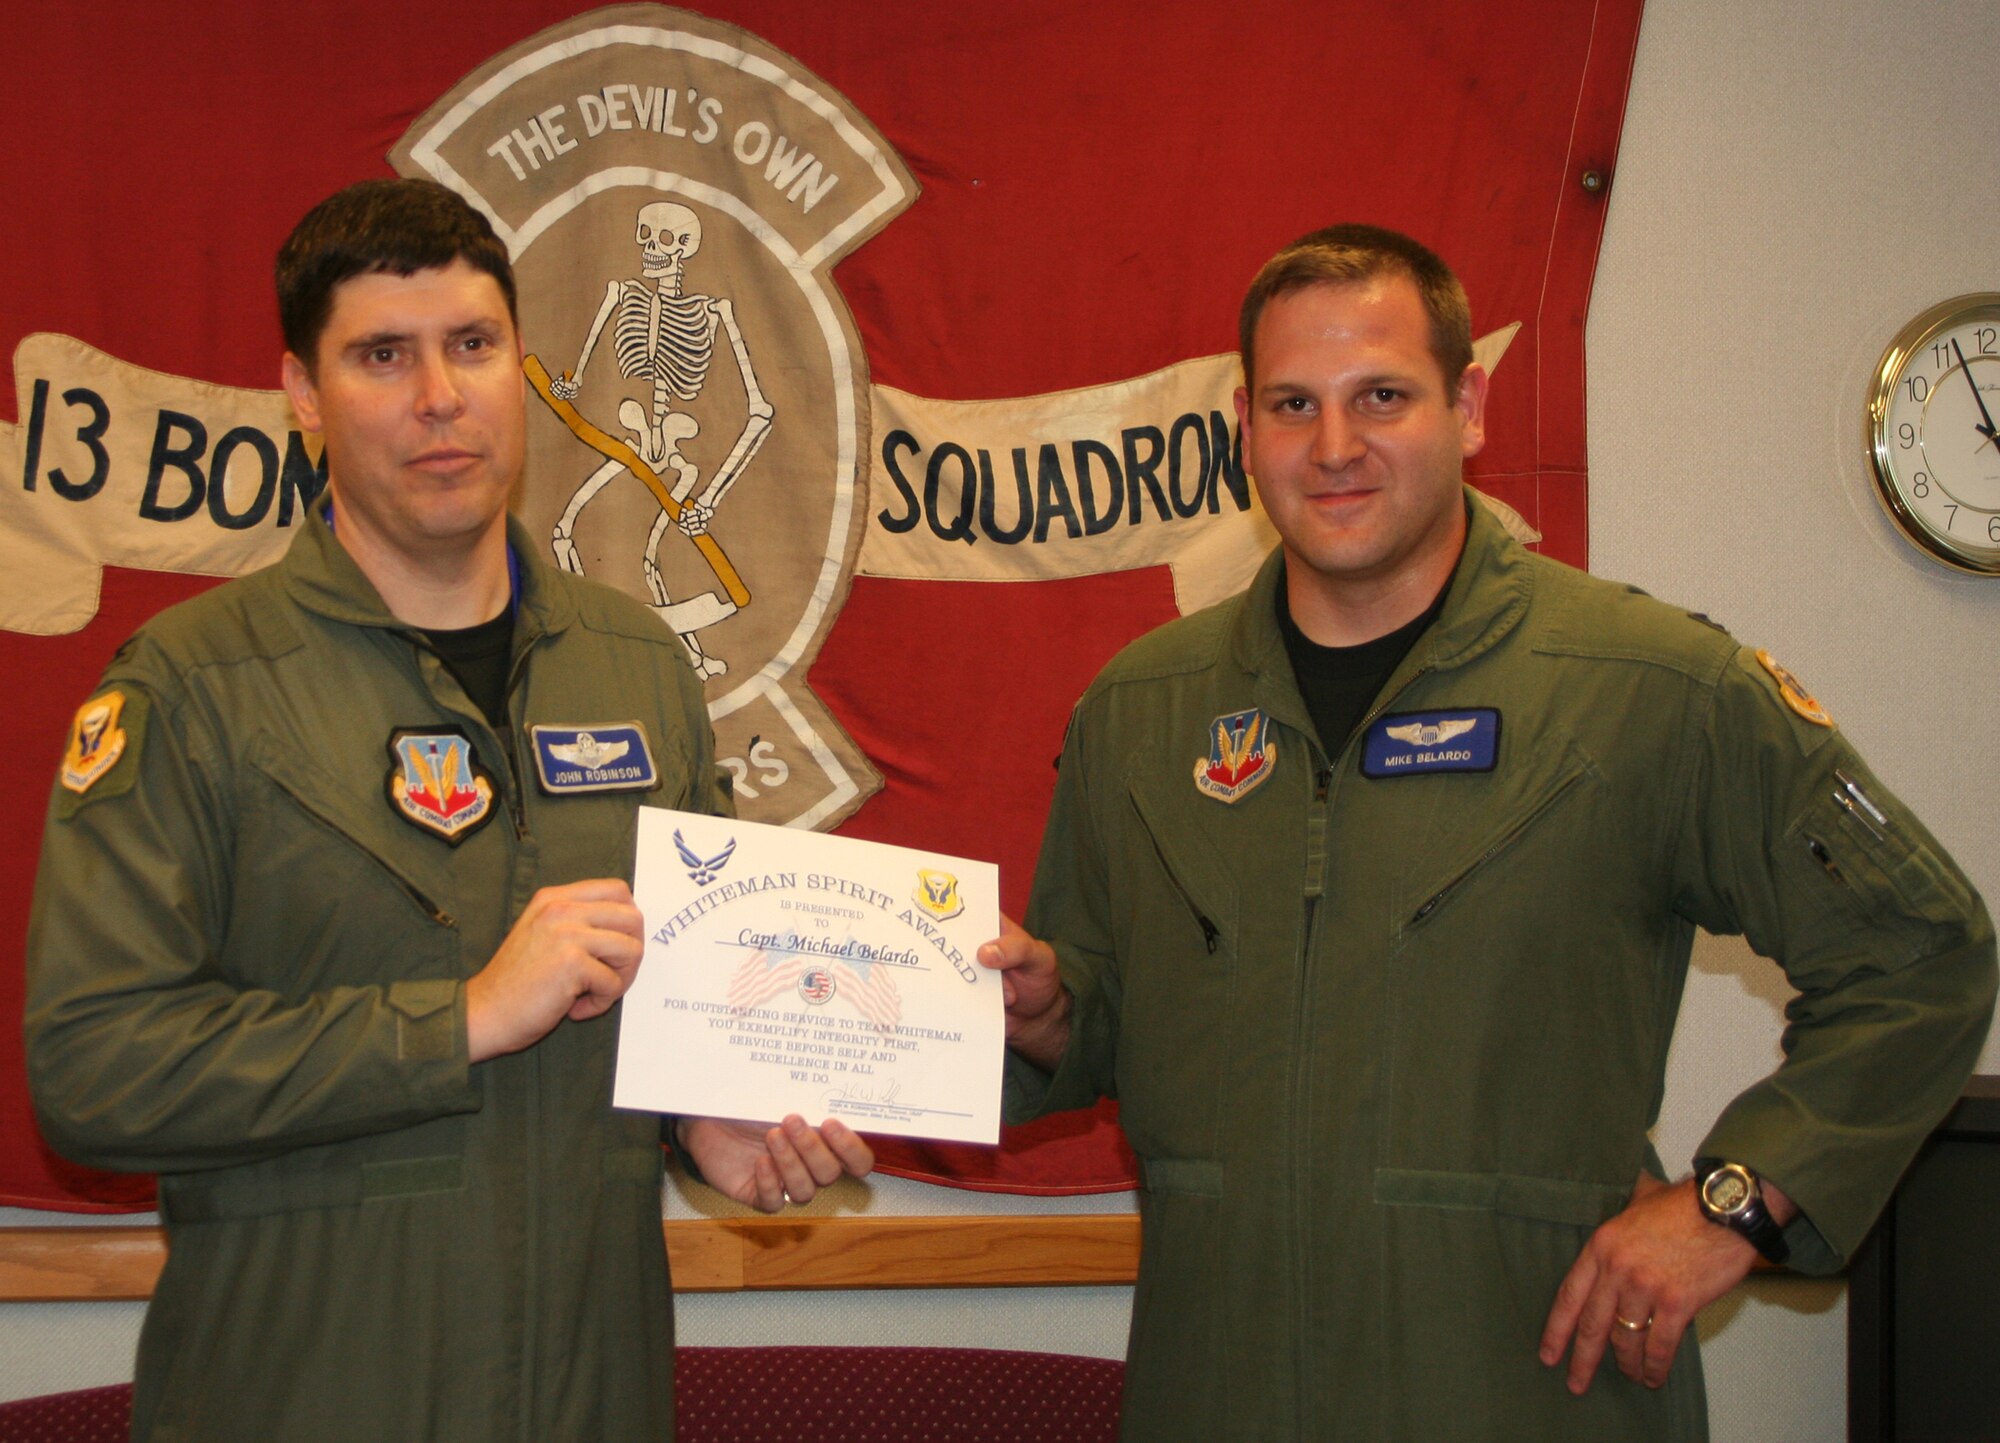 WHITEMAN AIR FORCE BASE, Mo. -- Col. John Robinson, 509th Bomb Wing vice commander, presents the Whiteman Spirit Award to Capt. Michael Belardo, 13th Bomb Sqaudron, Nov. 19. (U.S. Air Force photo/1st Lt. Candace Cutrufo) 